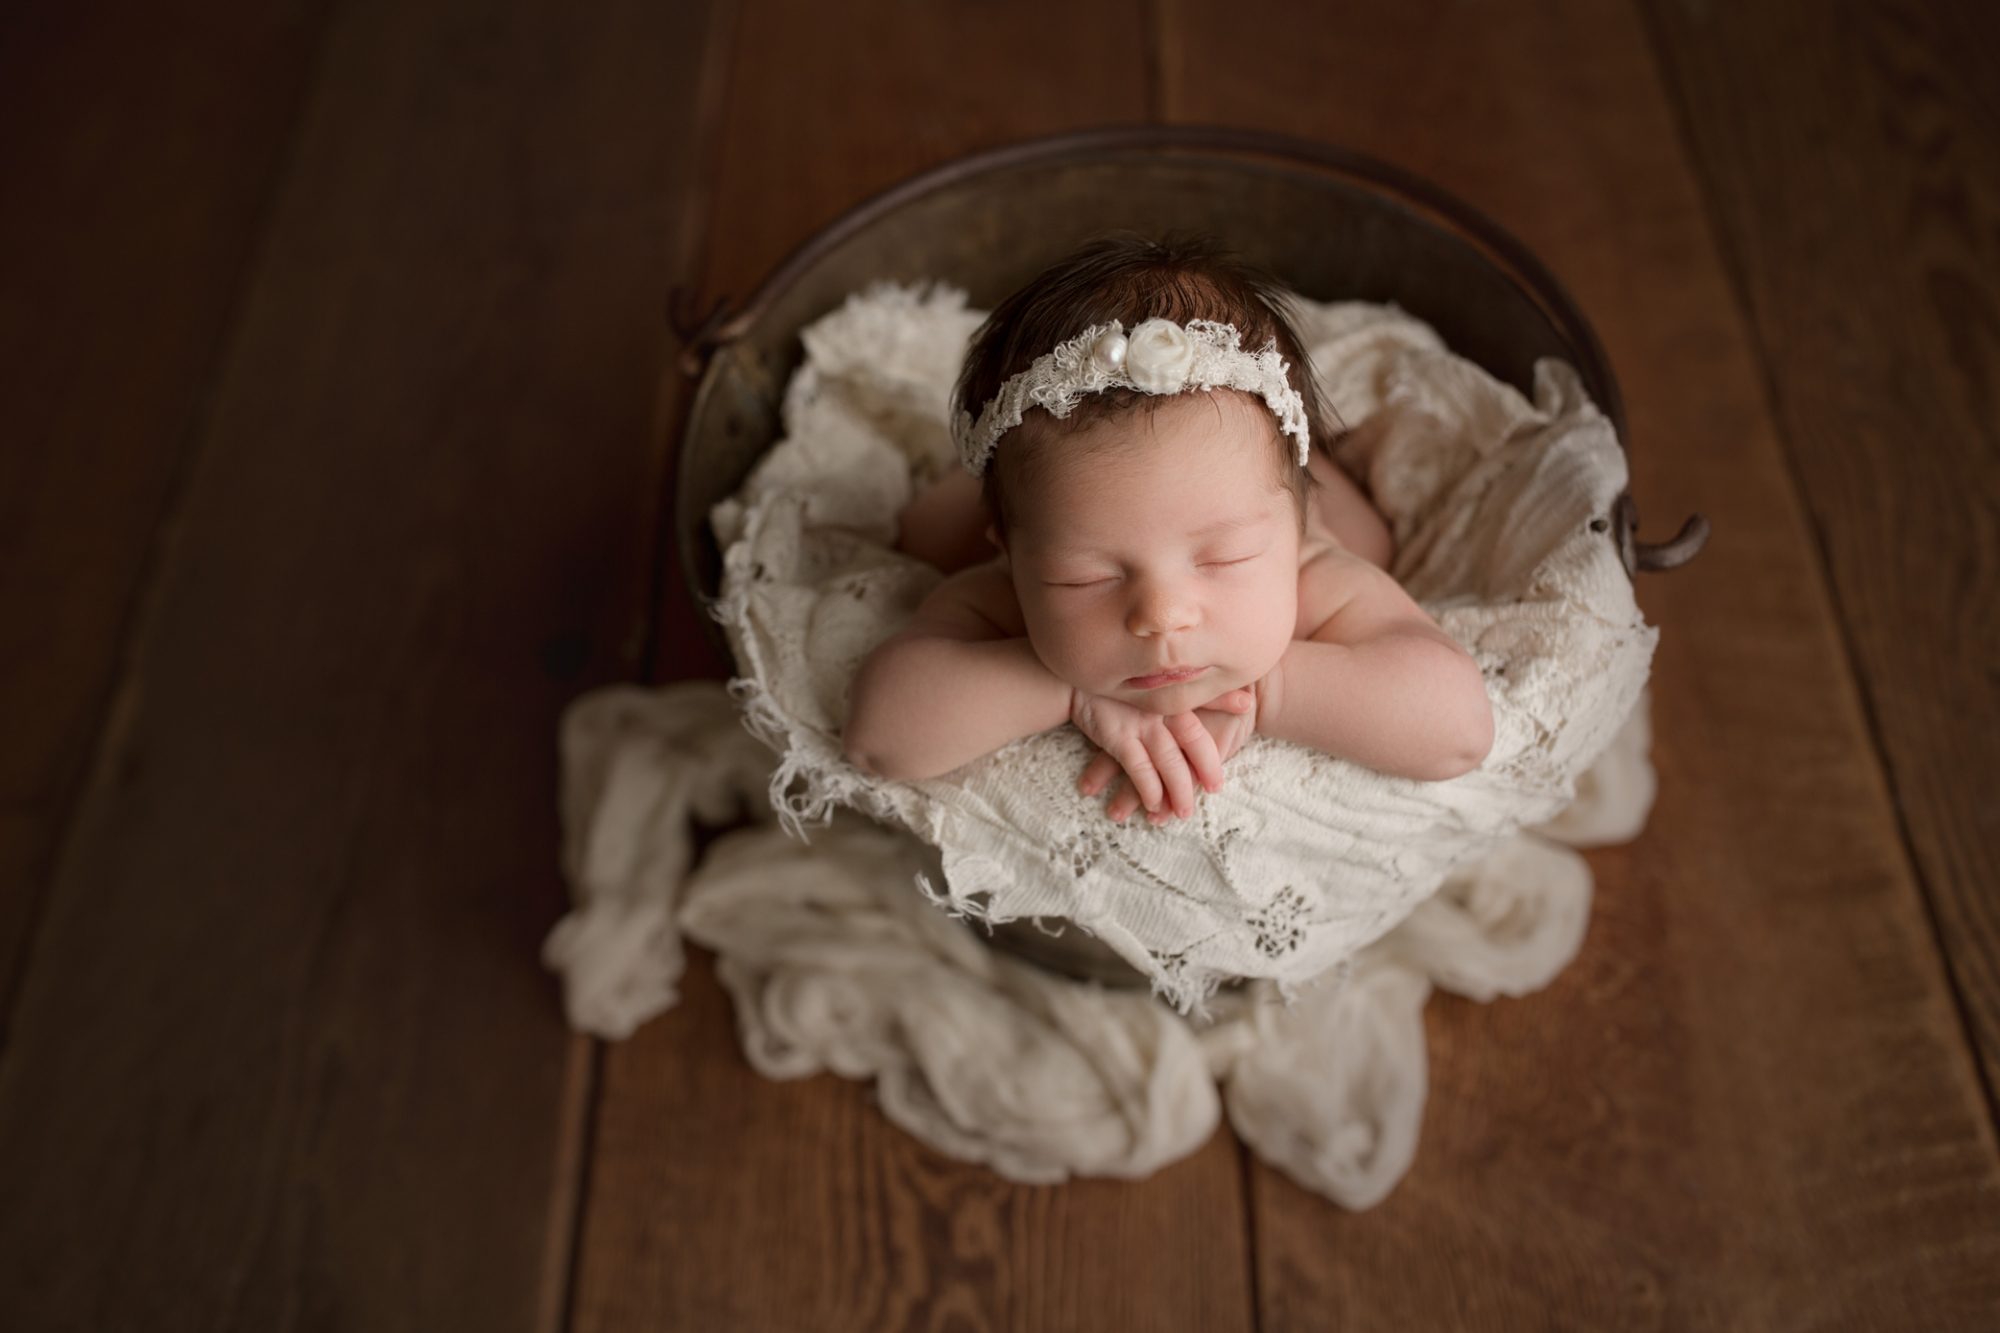 baby girl p | newborn photography tacoma